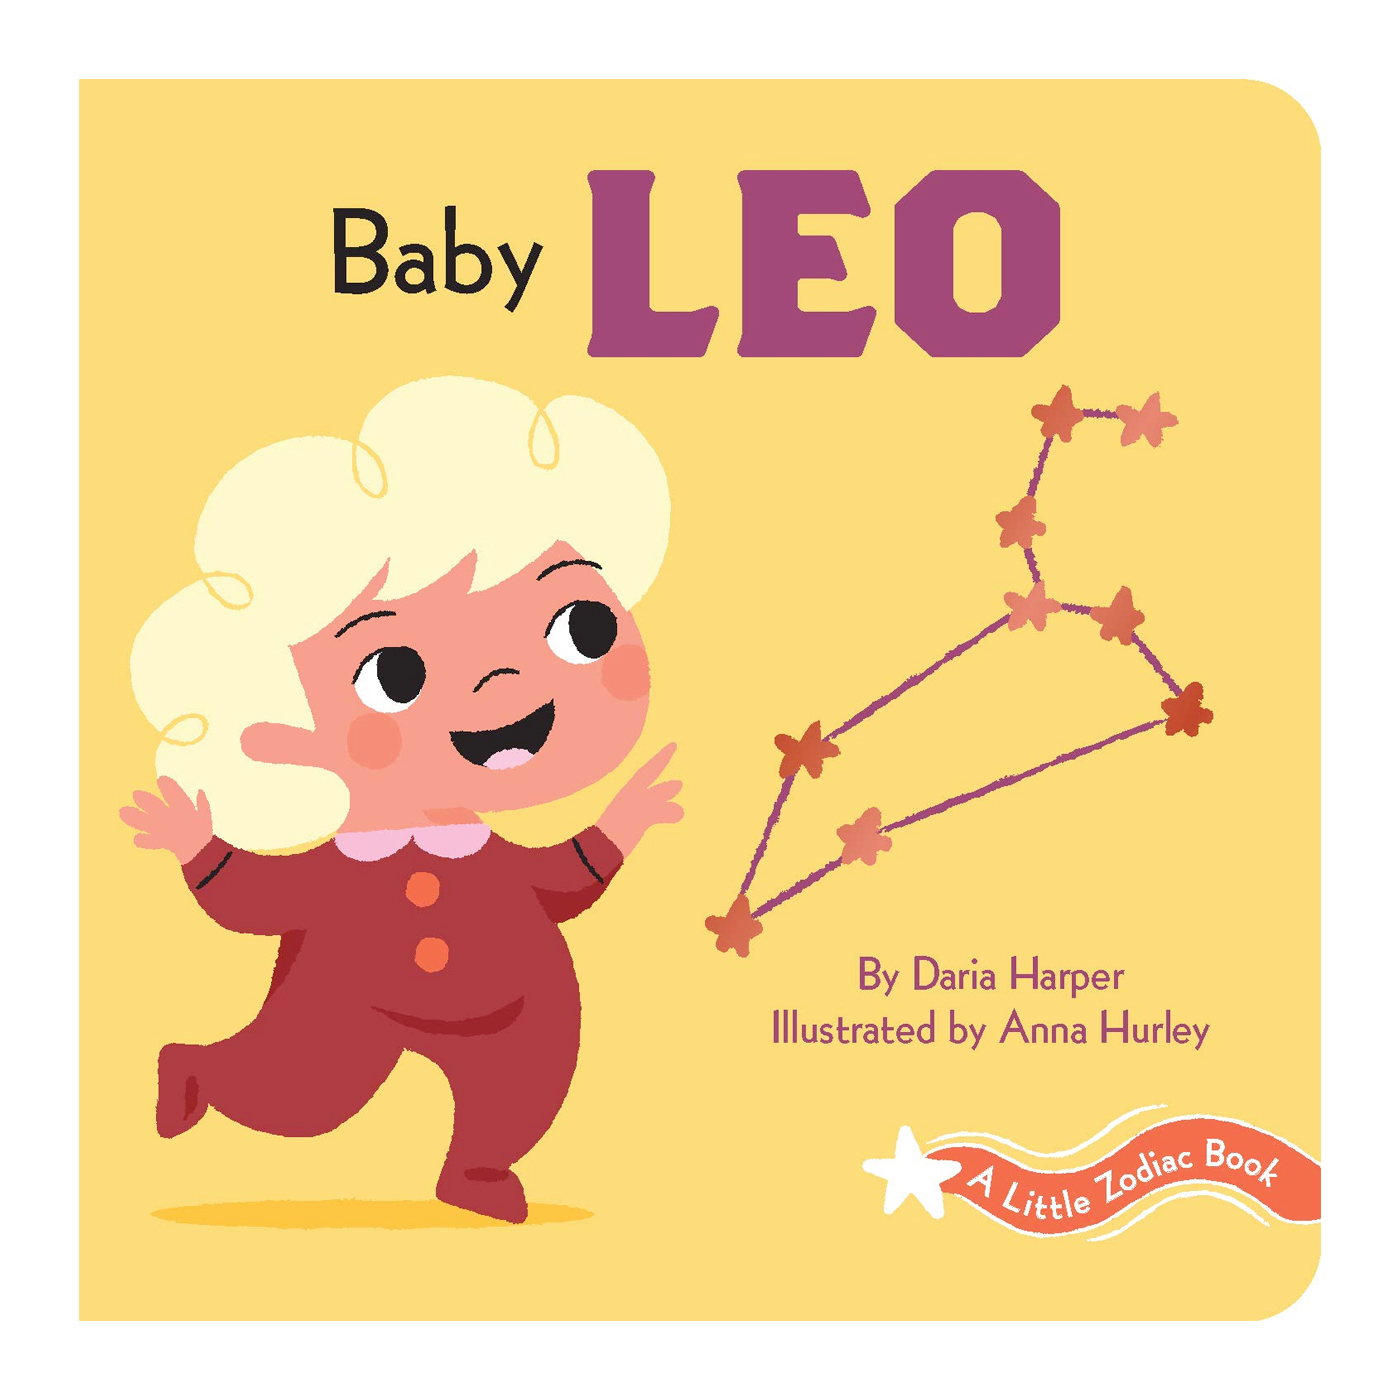 ABRAMS BOOKS Little Zodiac Book: Baby Leo